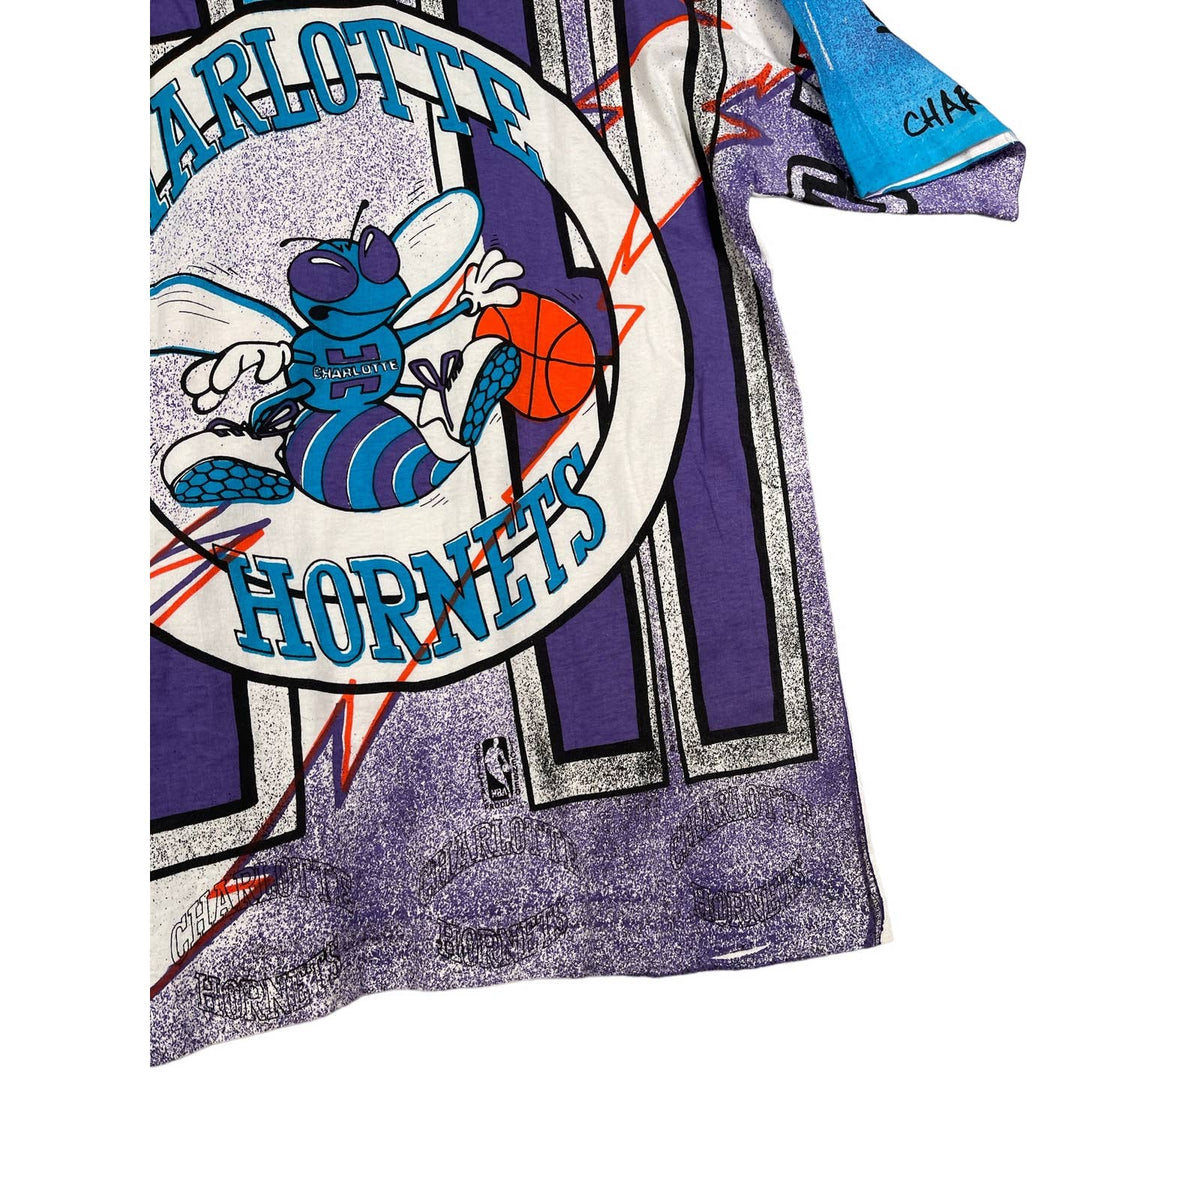 Vintage 1990's Charlotte Hornets All Over Print T-Shirt